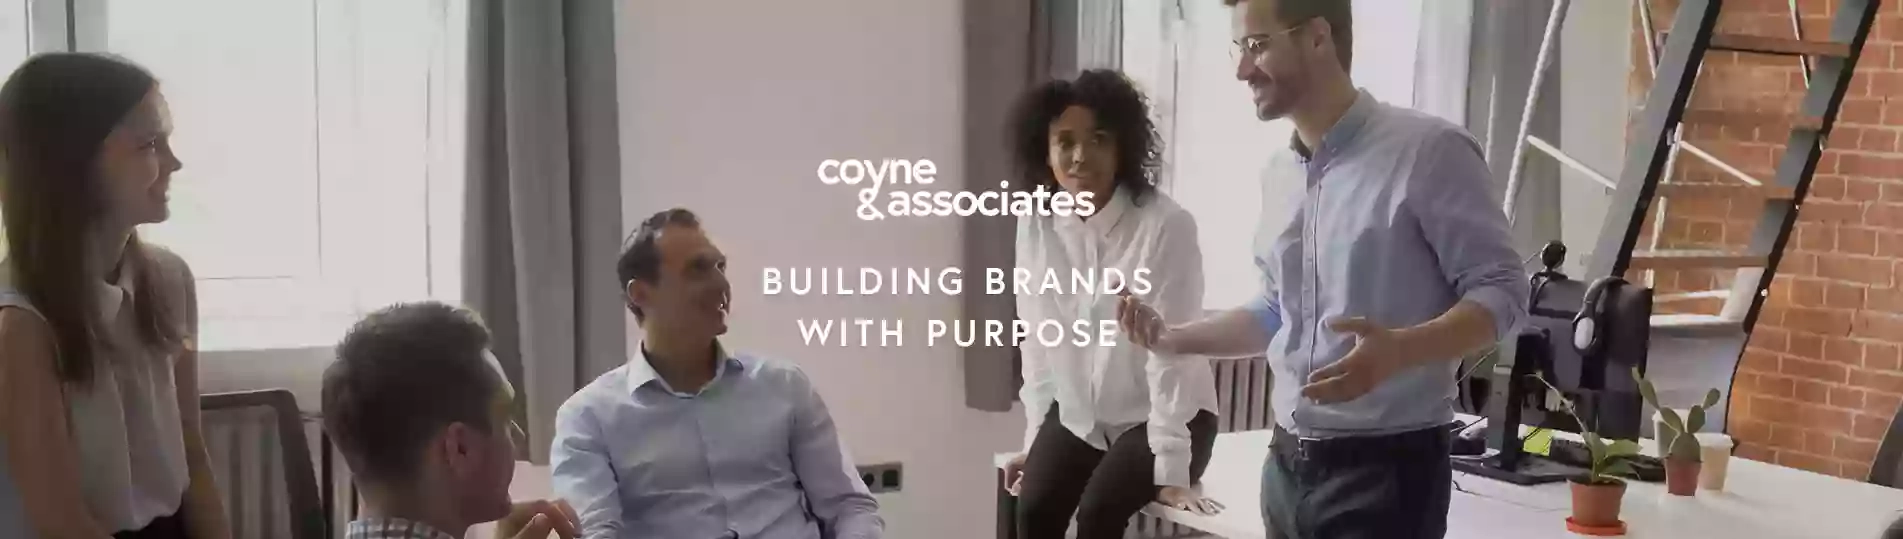 Coyne & Associates